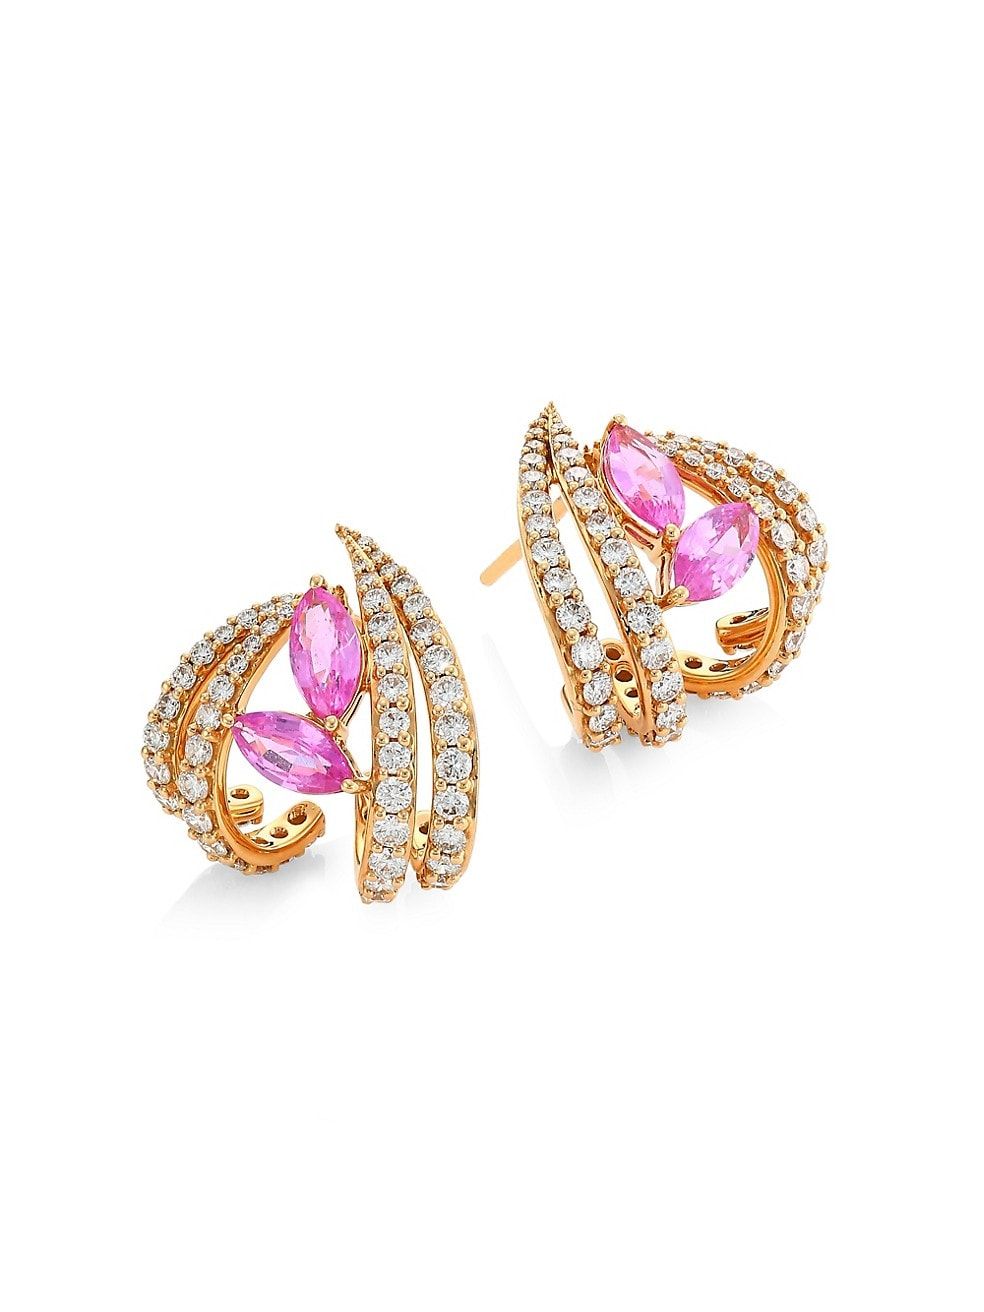 Botanica 18K Rose Gold, Diamond & Pink Sapphire Stud Earrings | Saks Fifth Avenue